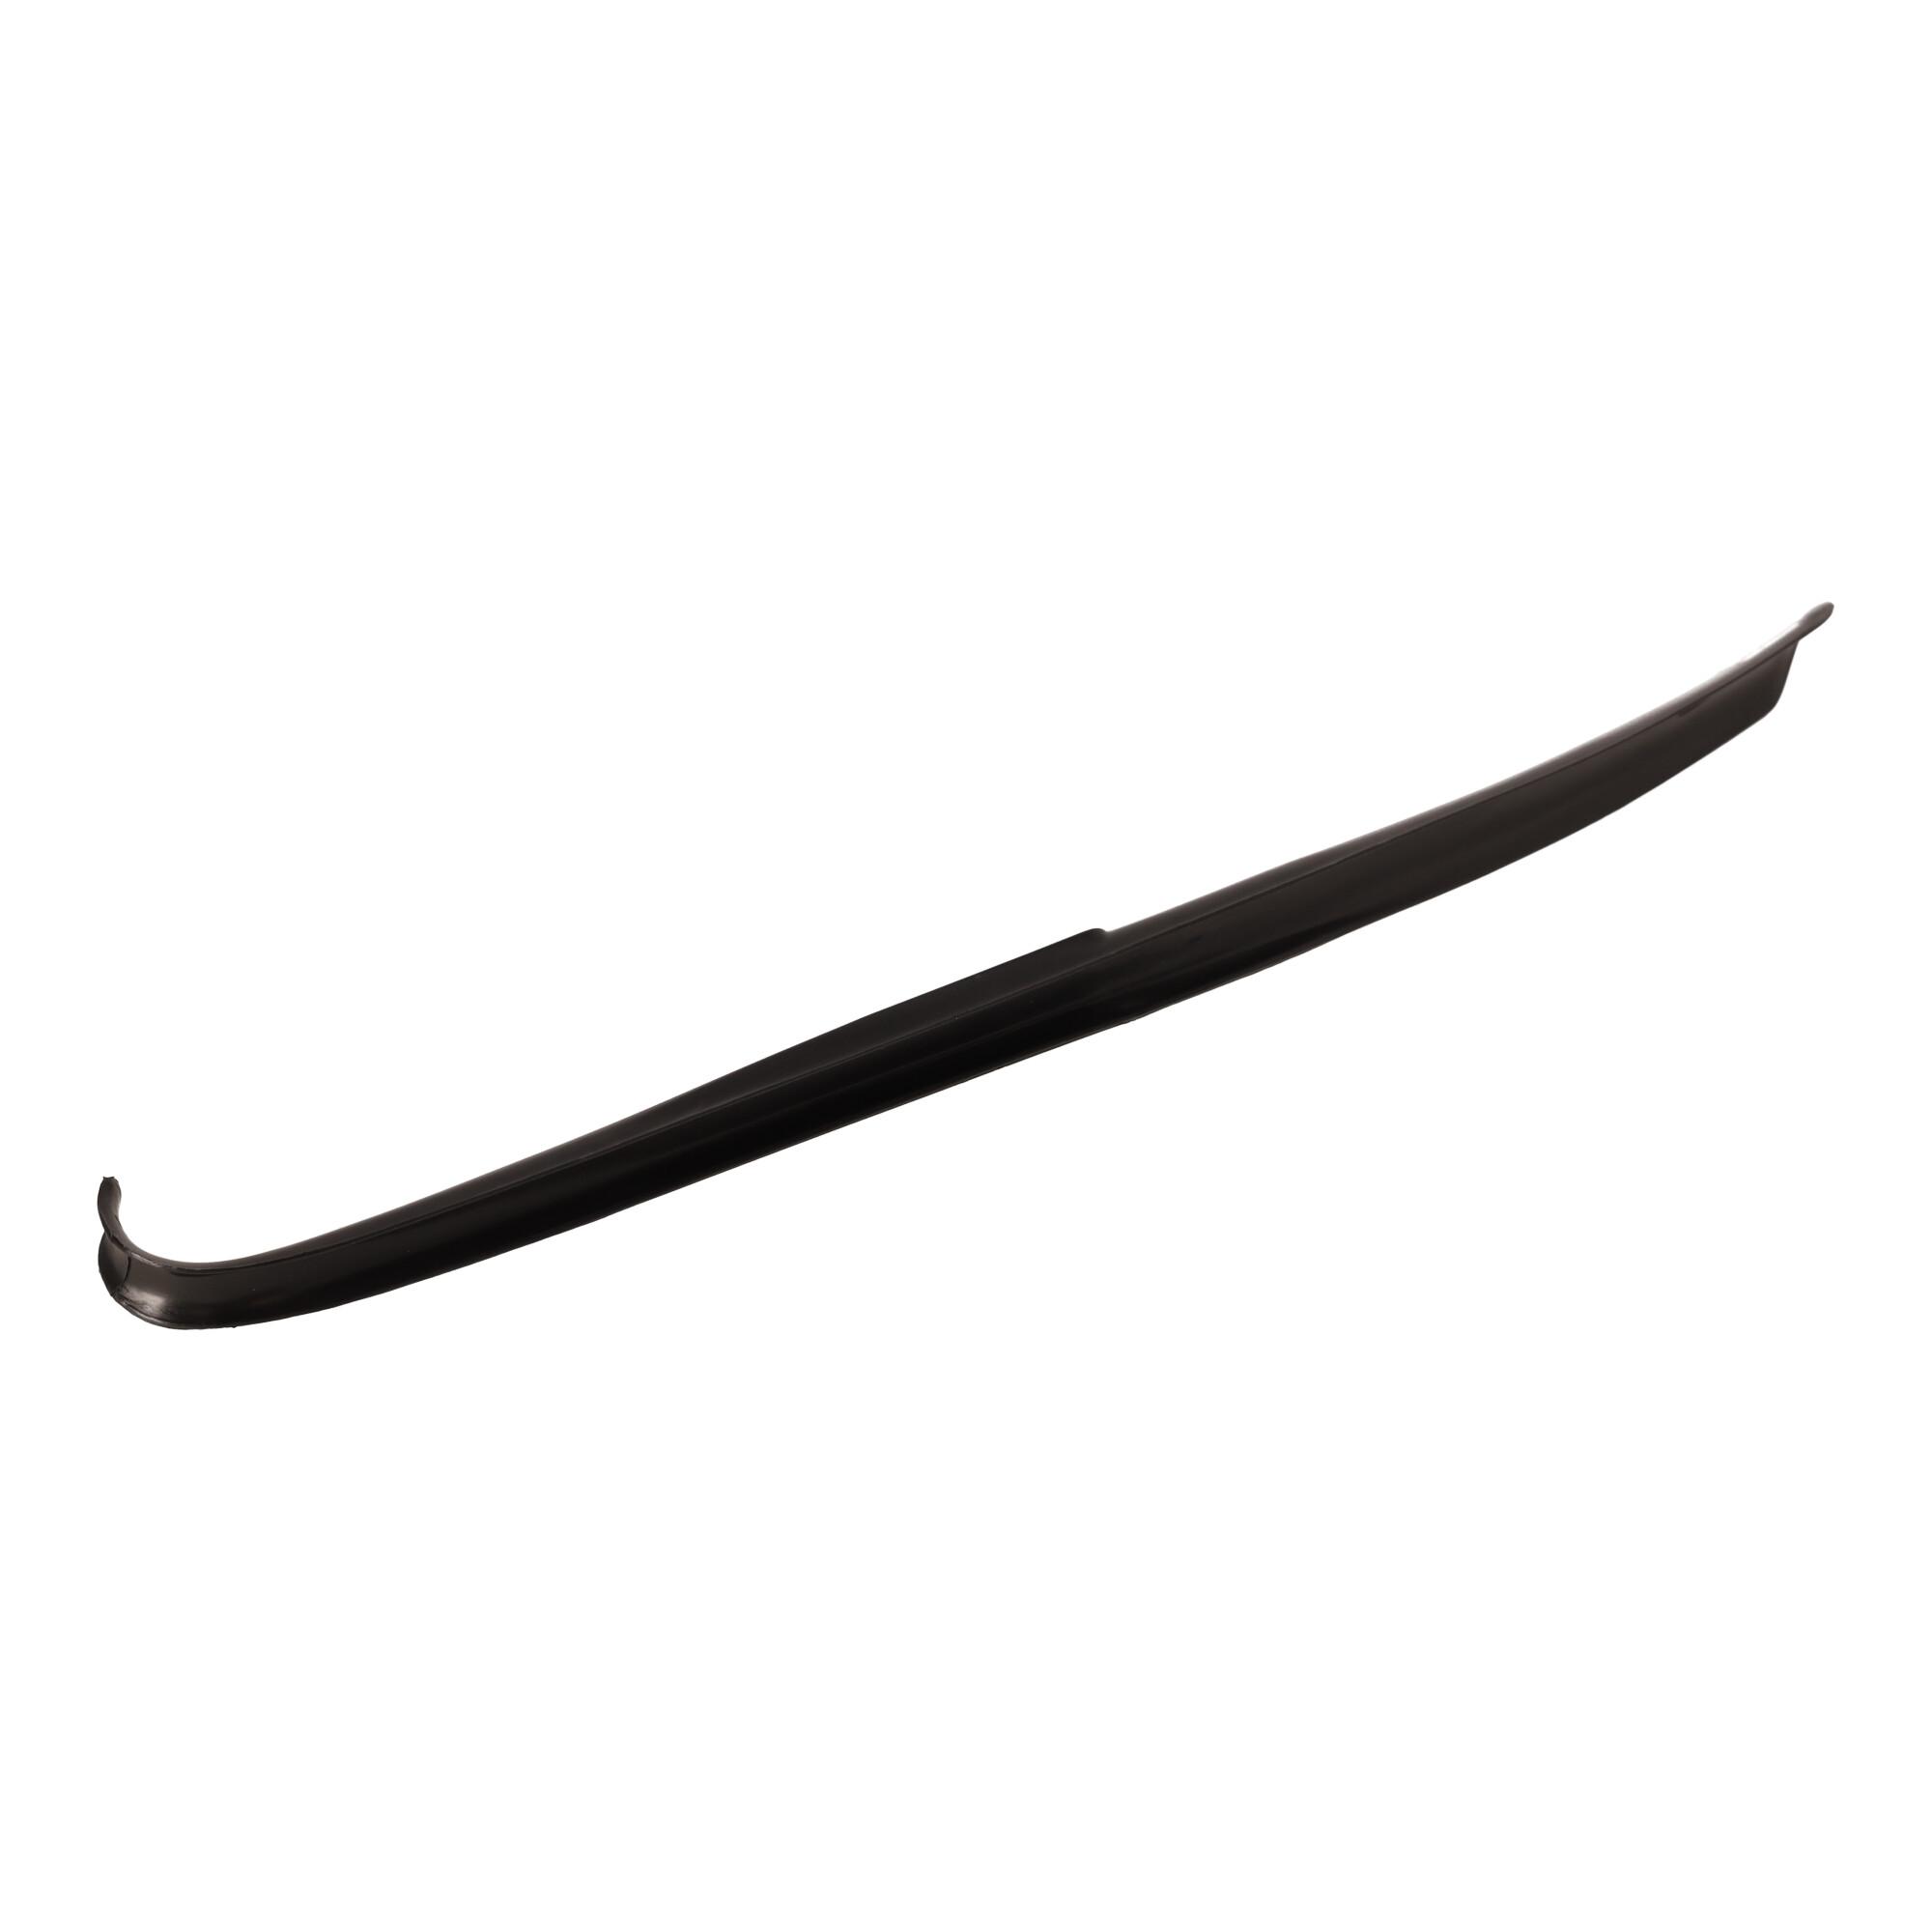 Shoehorn B001 long made of polypropylene - black